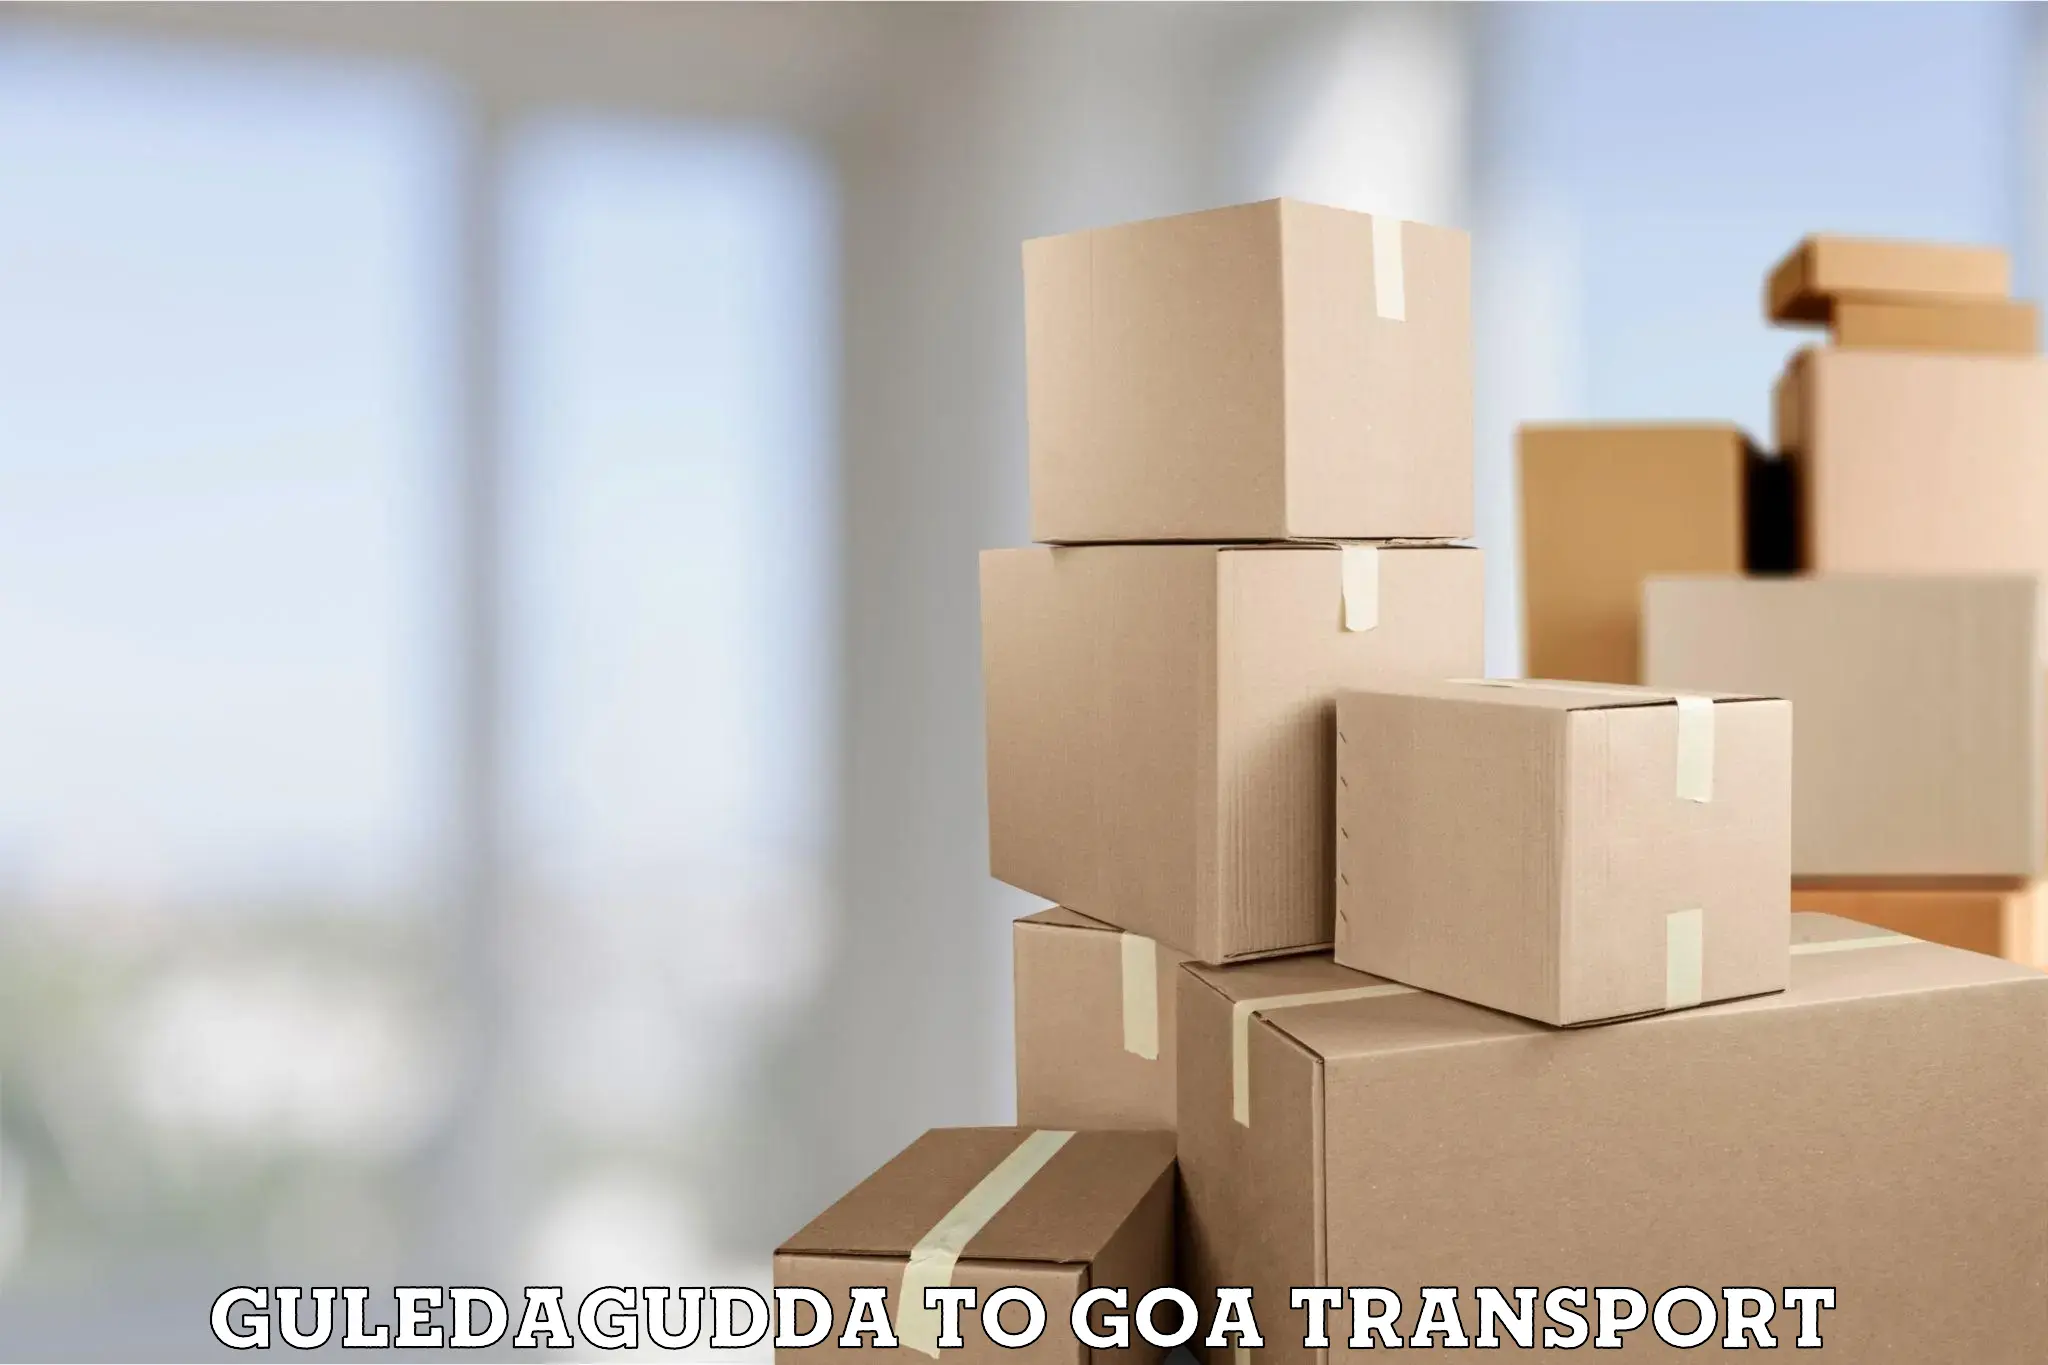 Goods delivery service Guledagudda to Goa